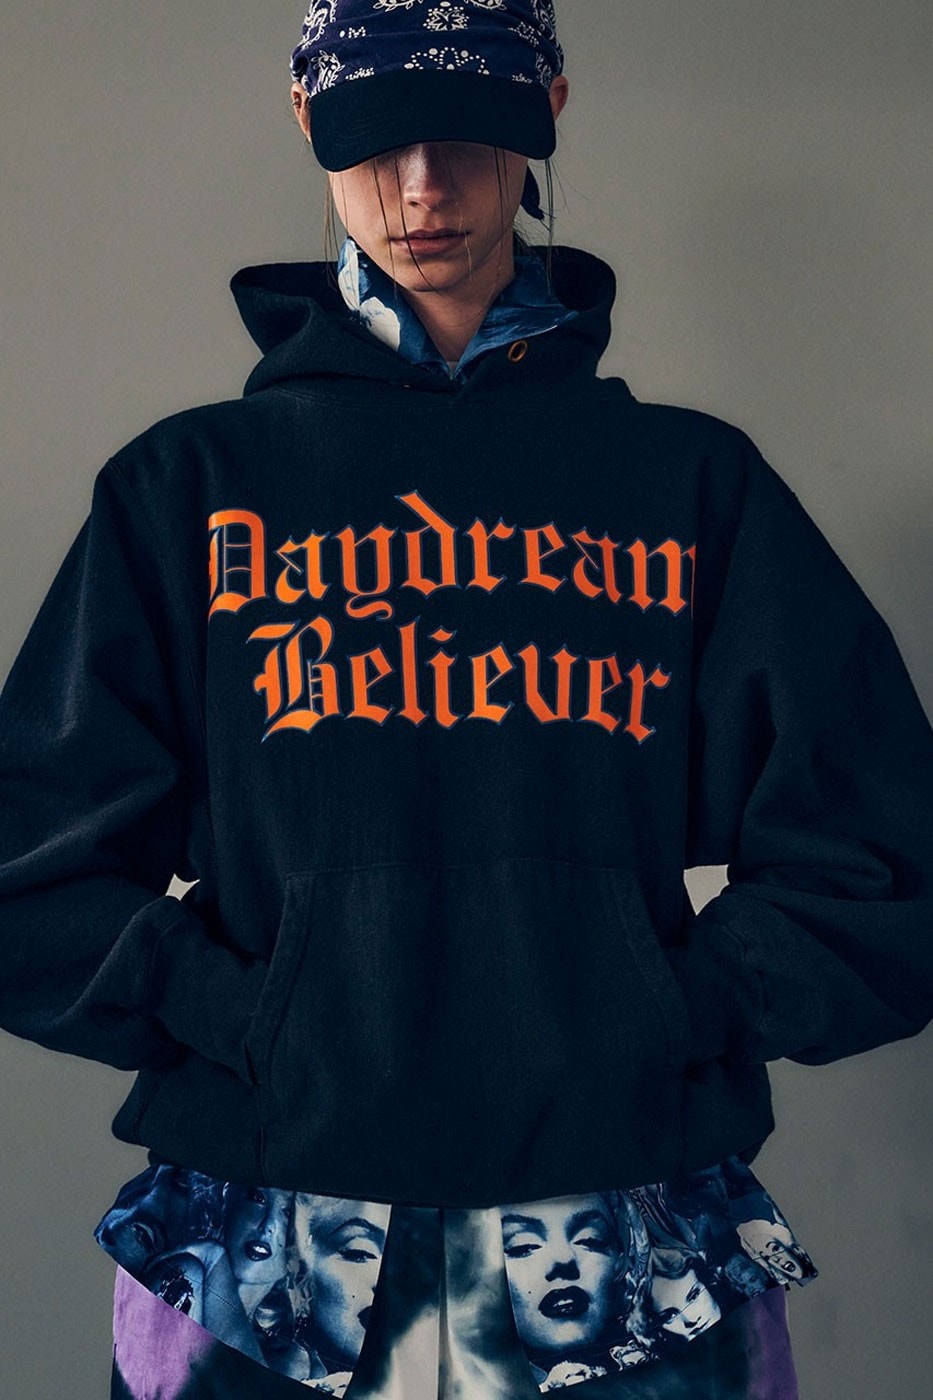 NEXUSVII. 2022 春夏系列「Daydream Believer」正式發佈